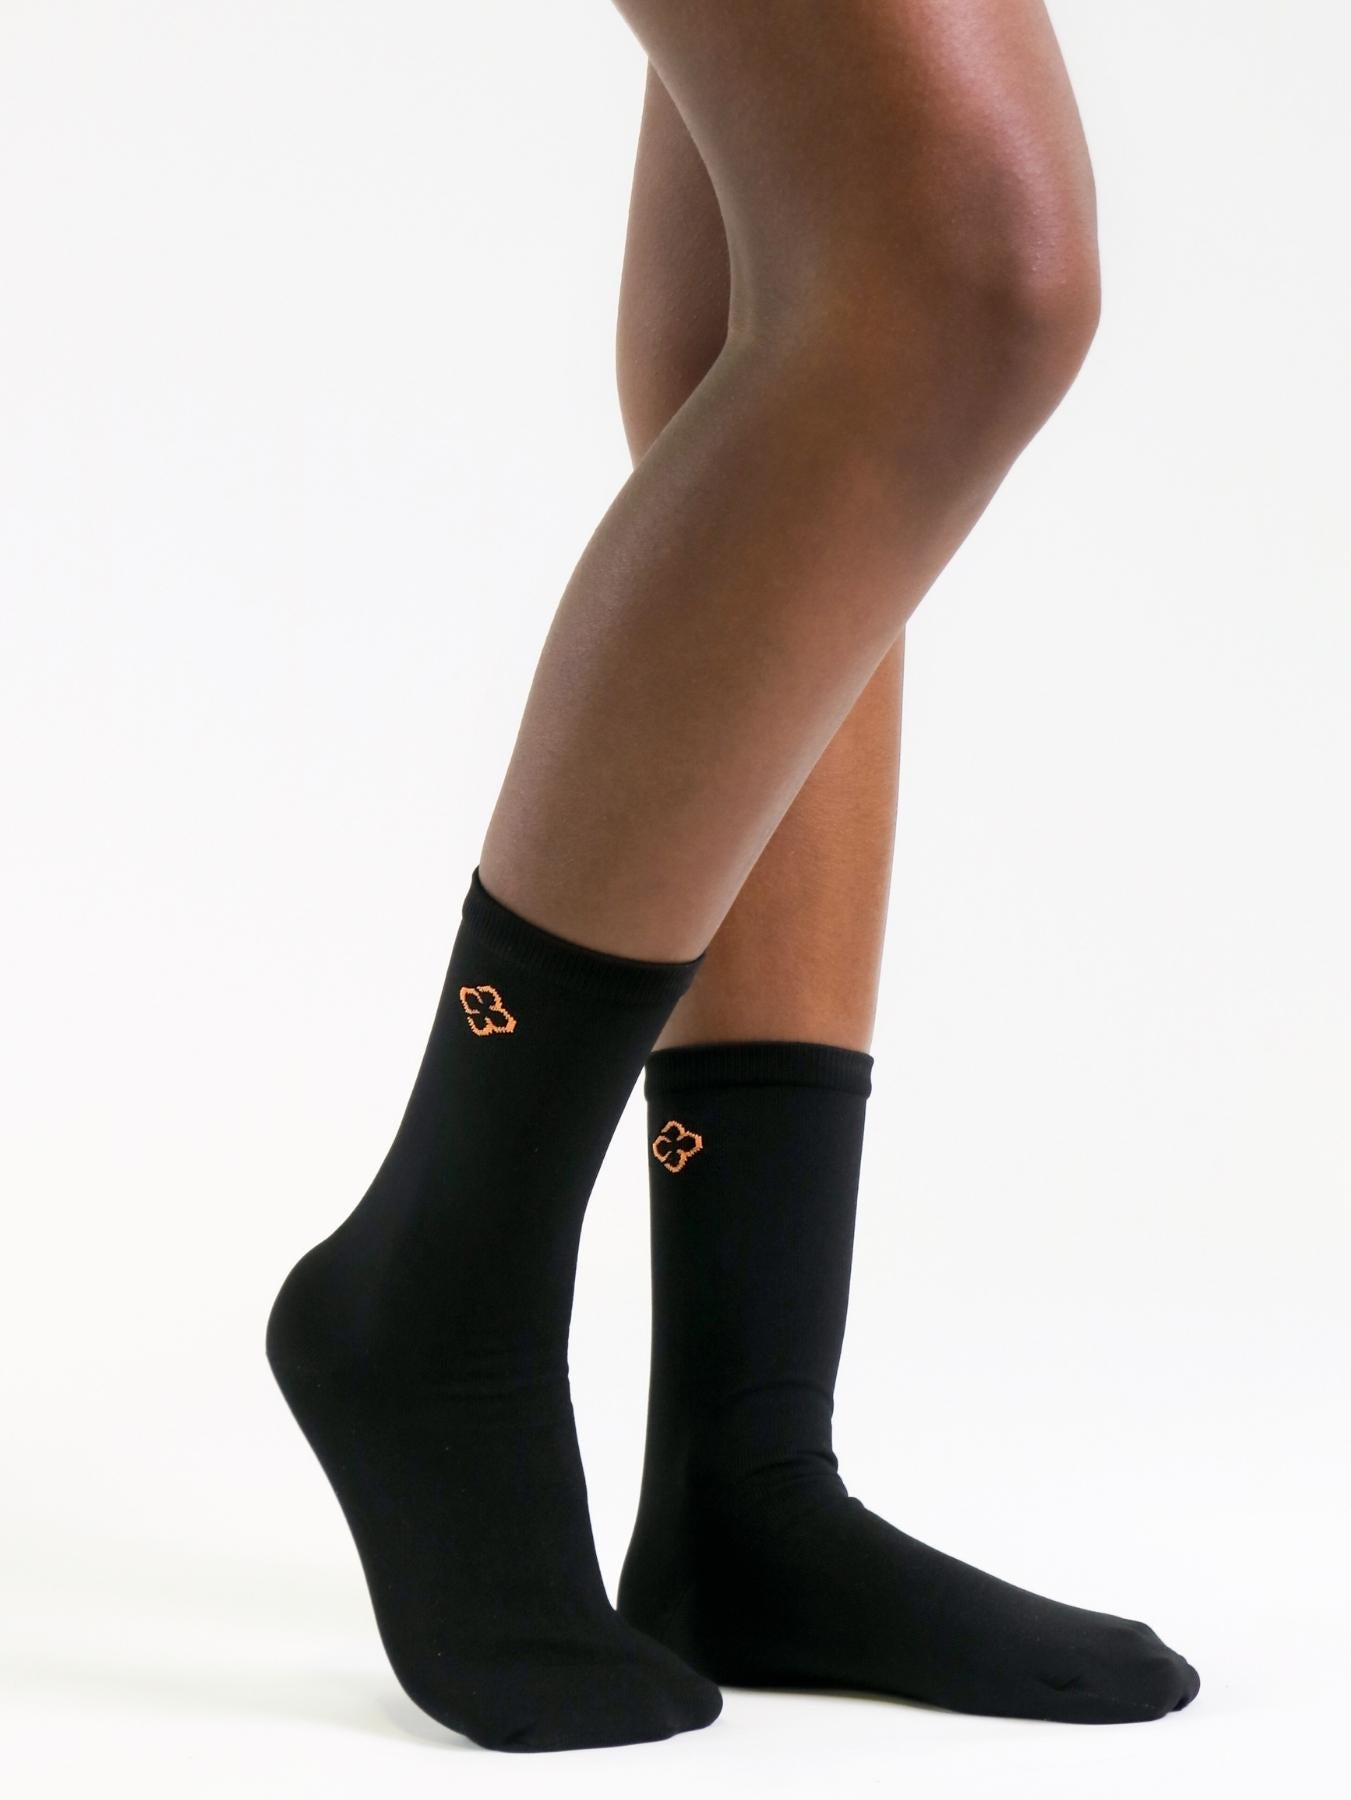 Copper Crew Socks / Liner - Ladies